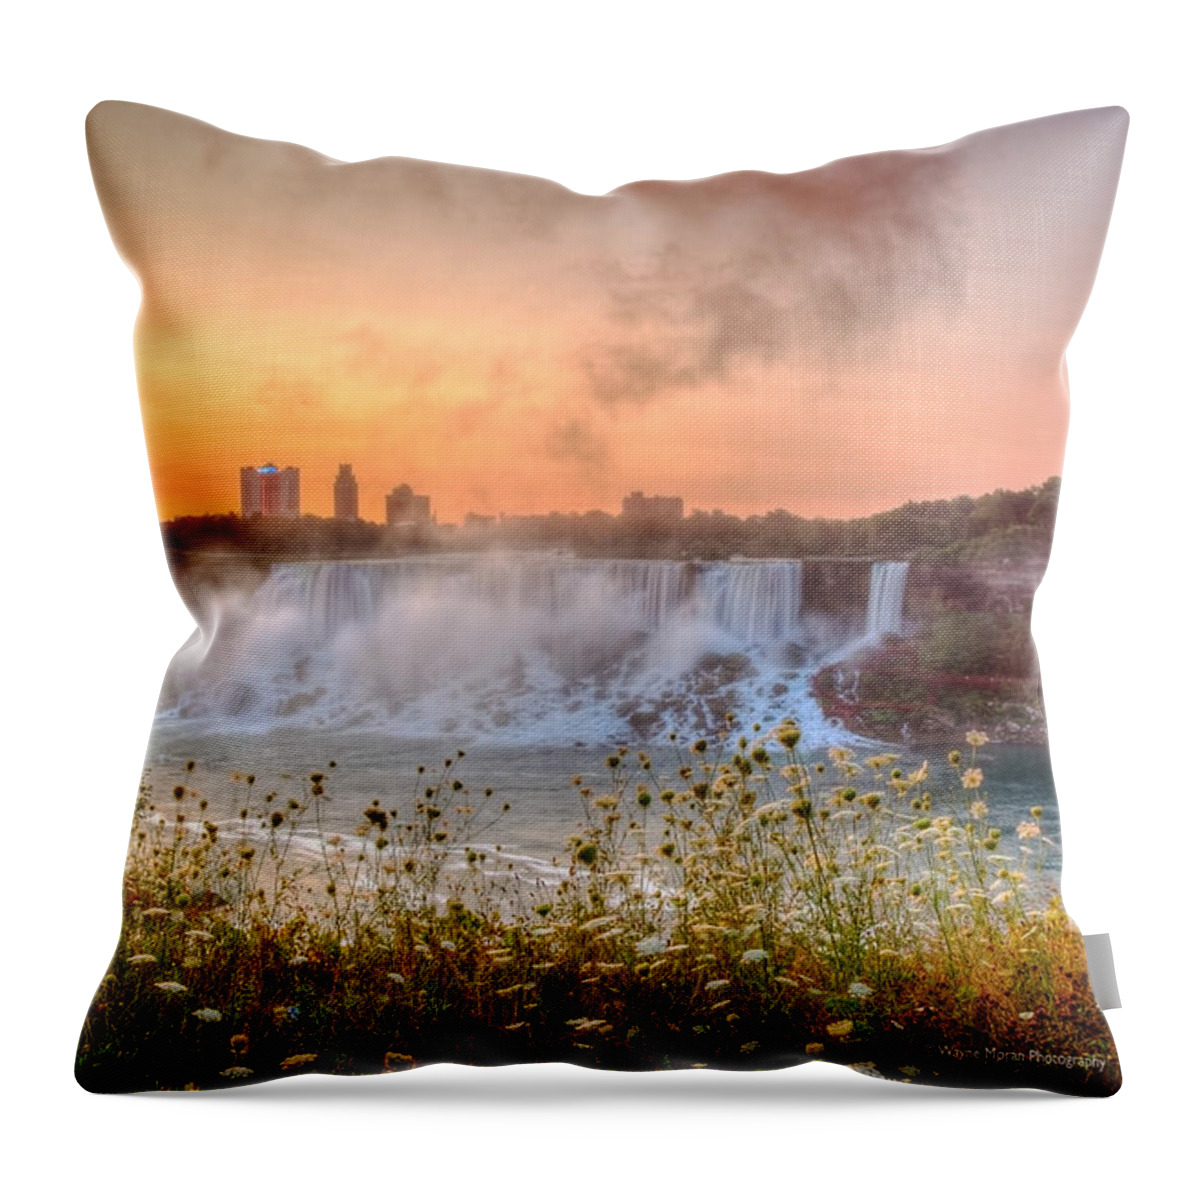 Niagara Falls Throw Pillow featuring the photograph Niagara Falls Canada Sunrise by Wayne Moran